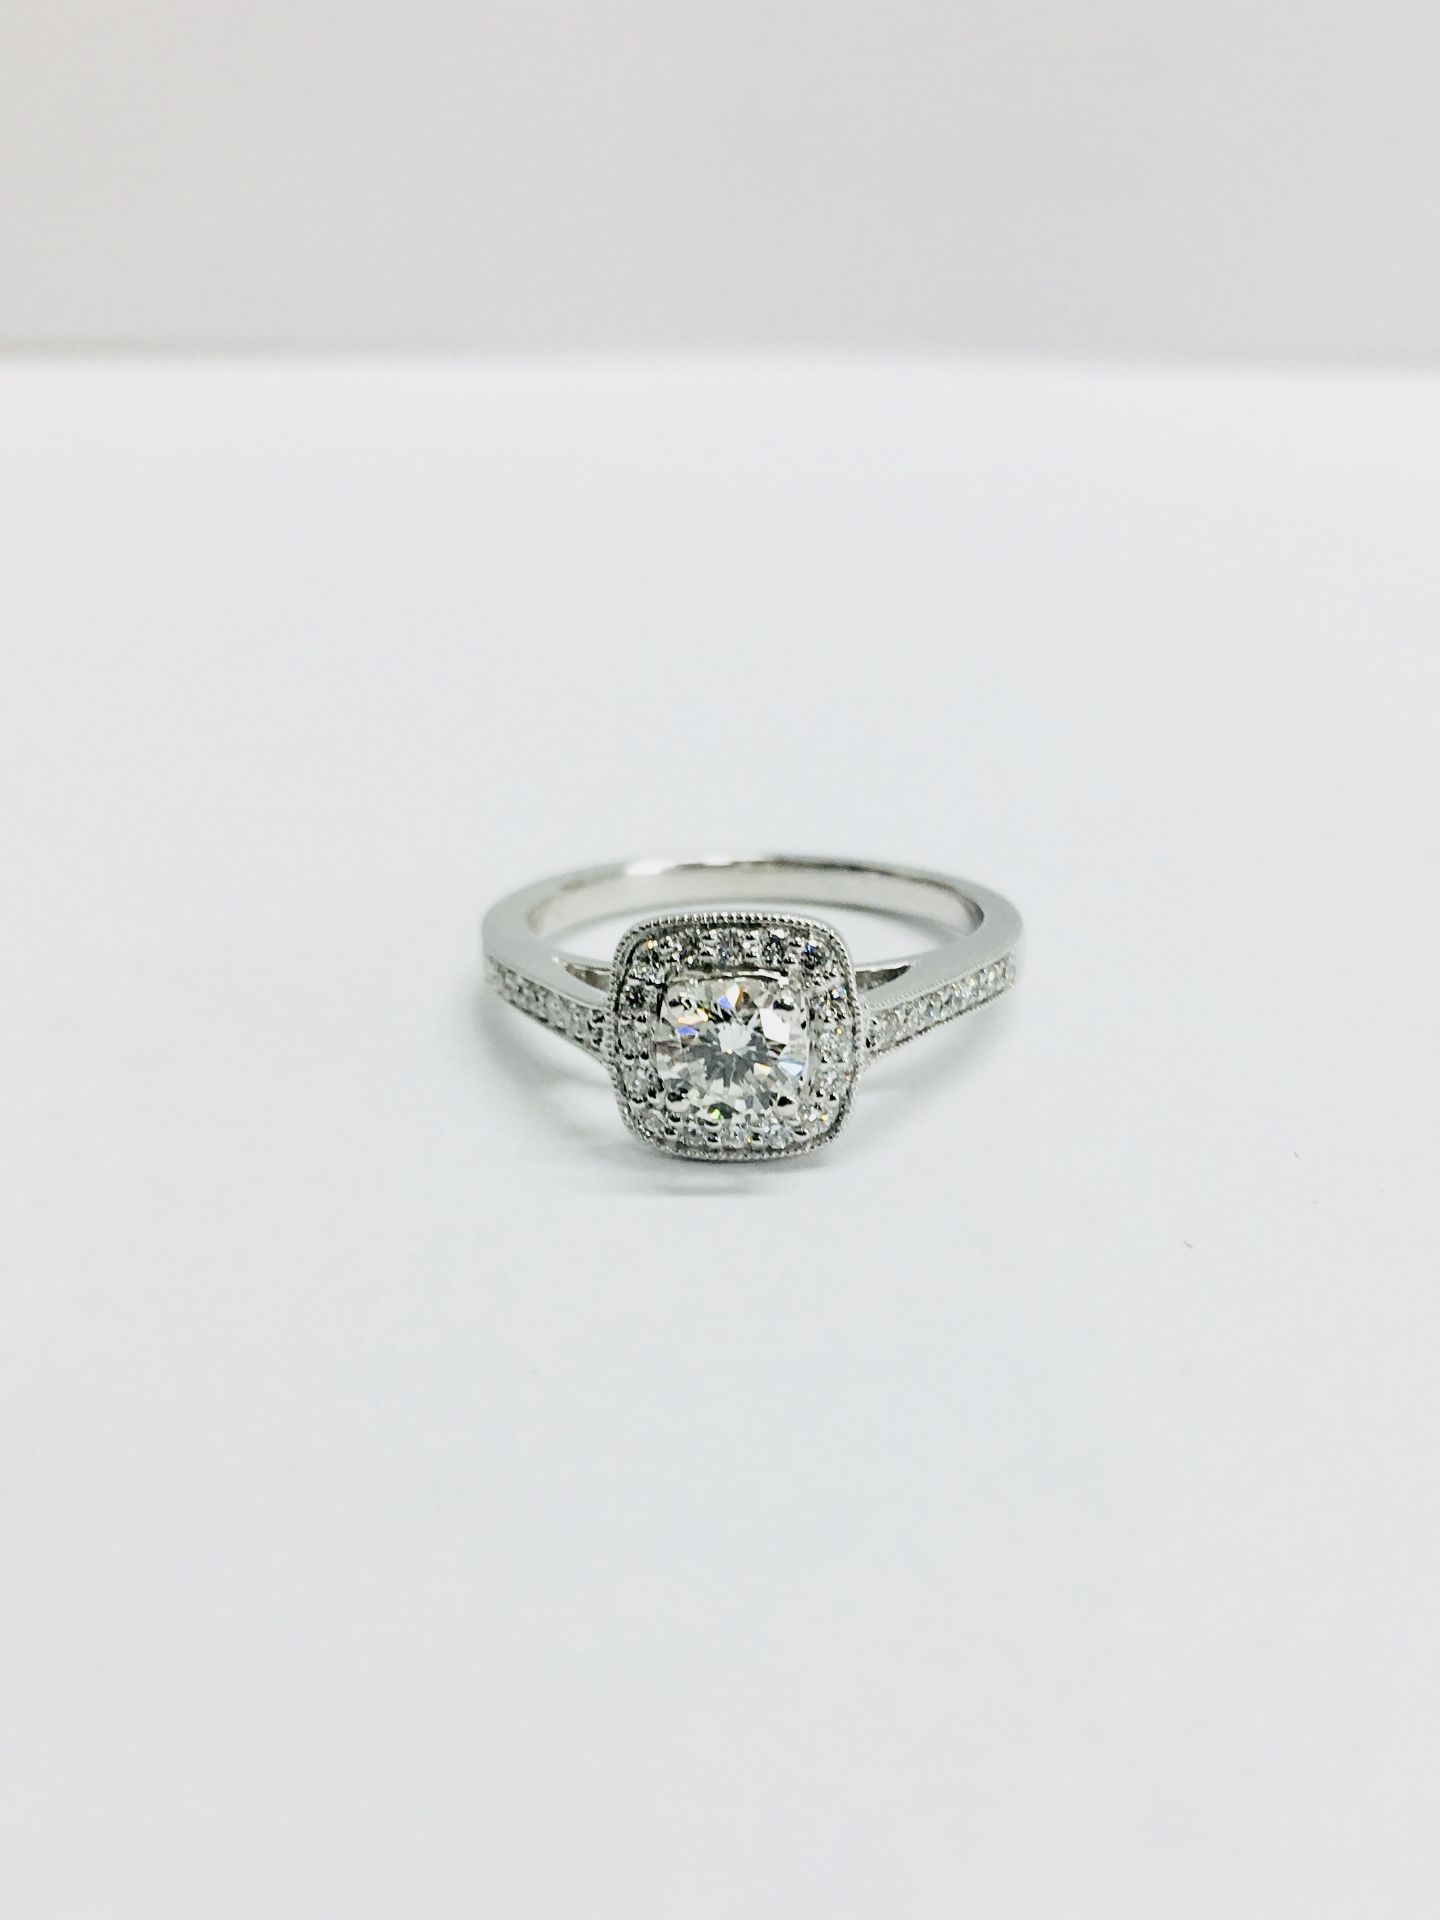 9ct white gold Diamond Halo solitaire ring,0.50ct centre D colour is vs clarity ,0.18ct h colour